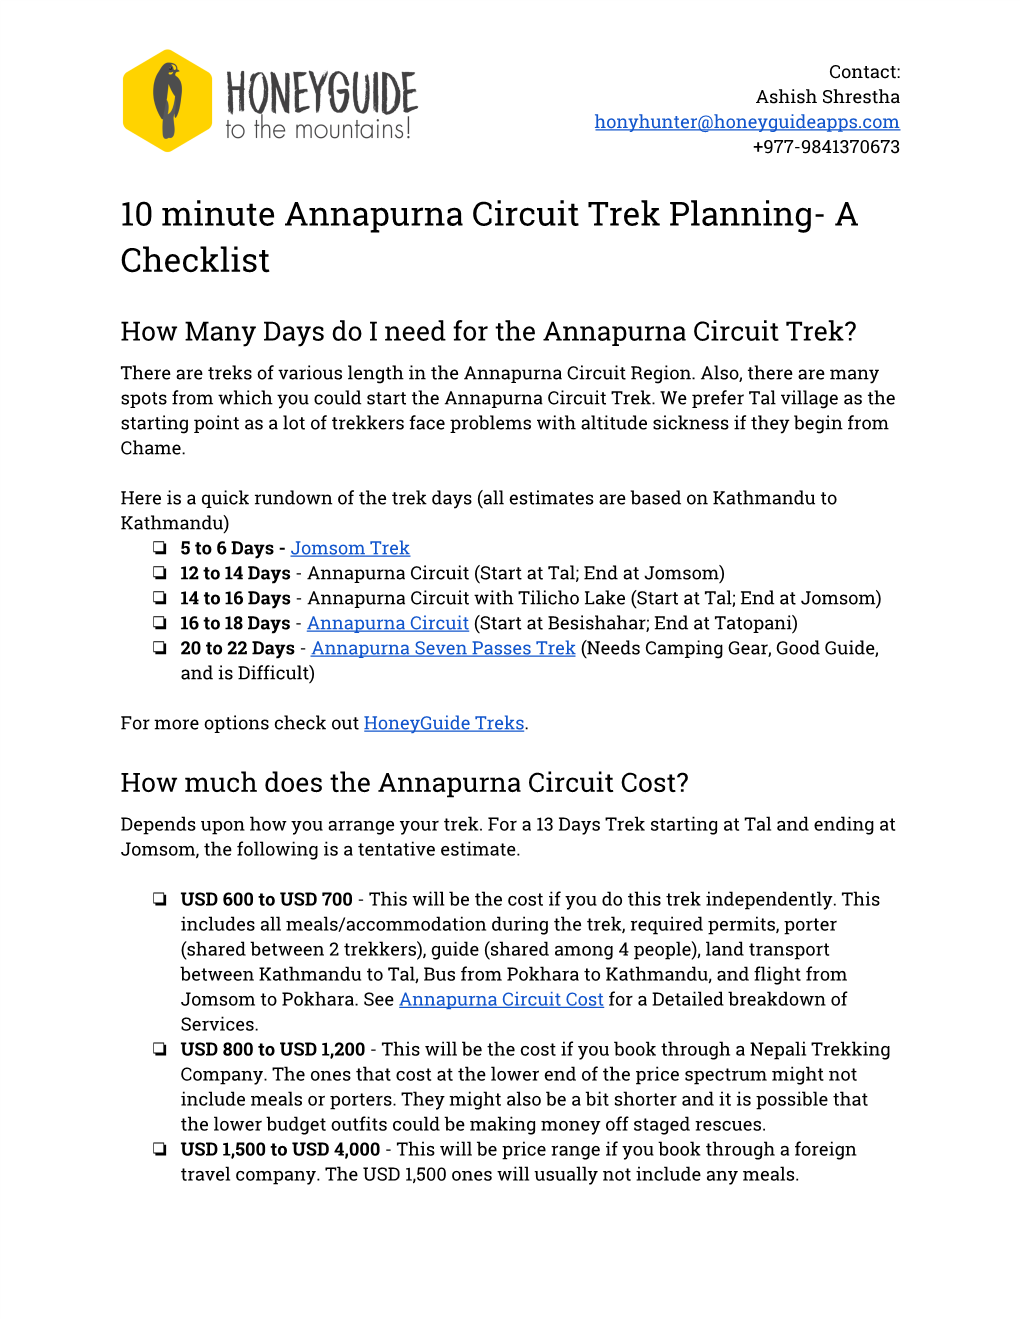 10 Minute Annapurna Circuit Trek Planning- a Checklist